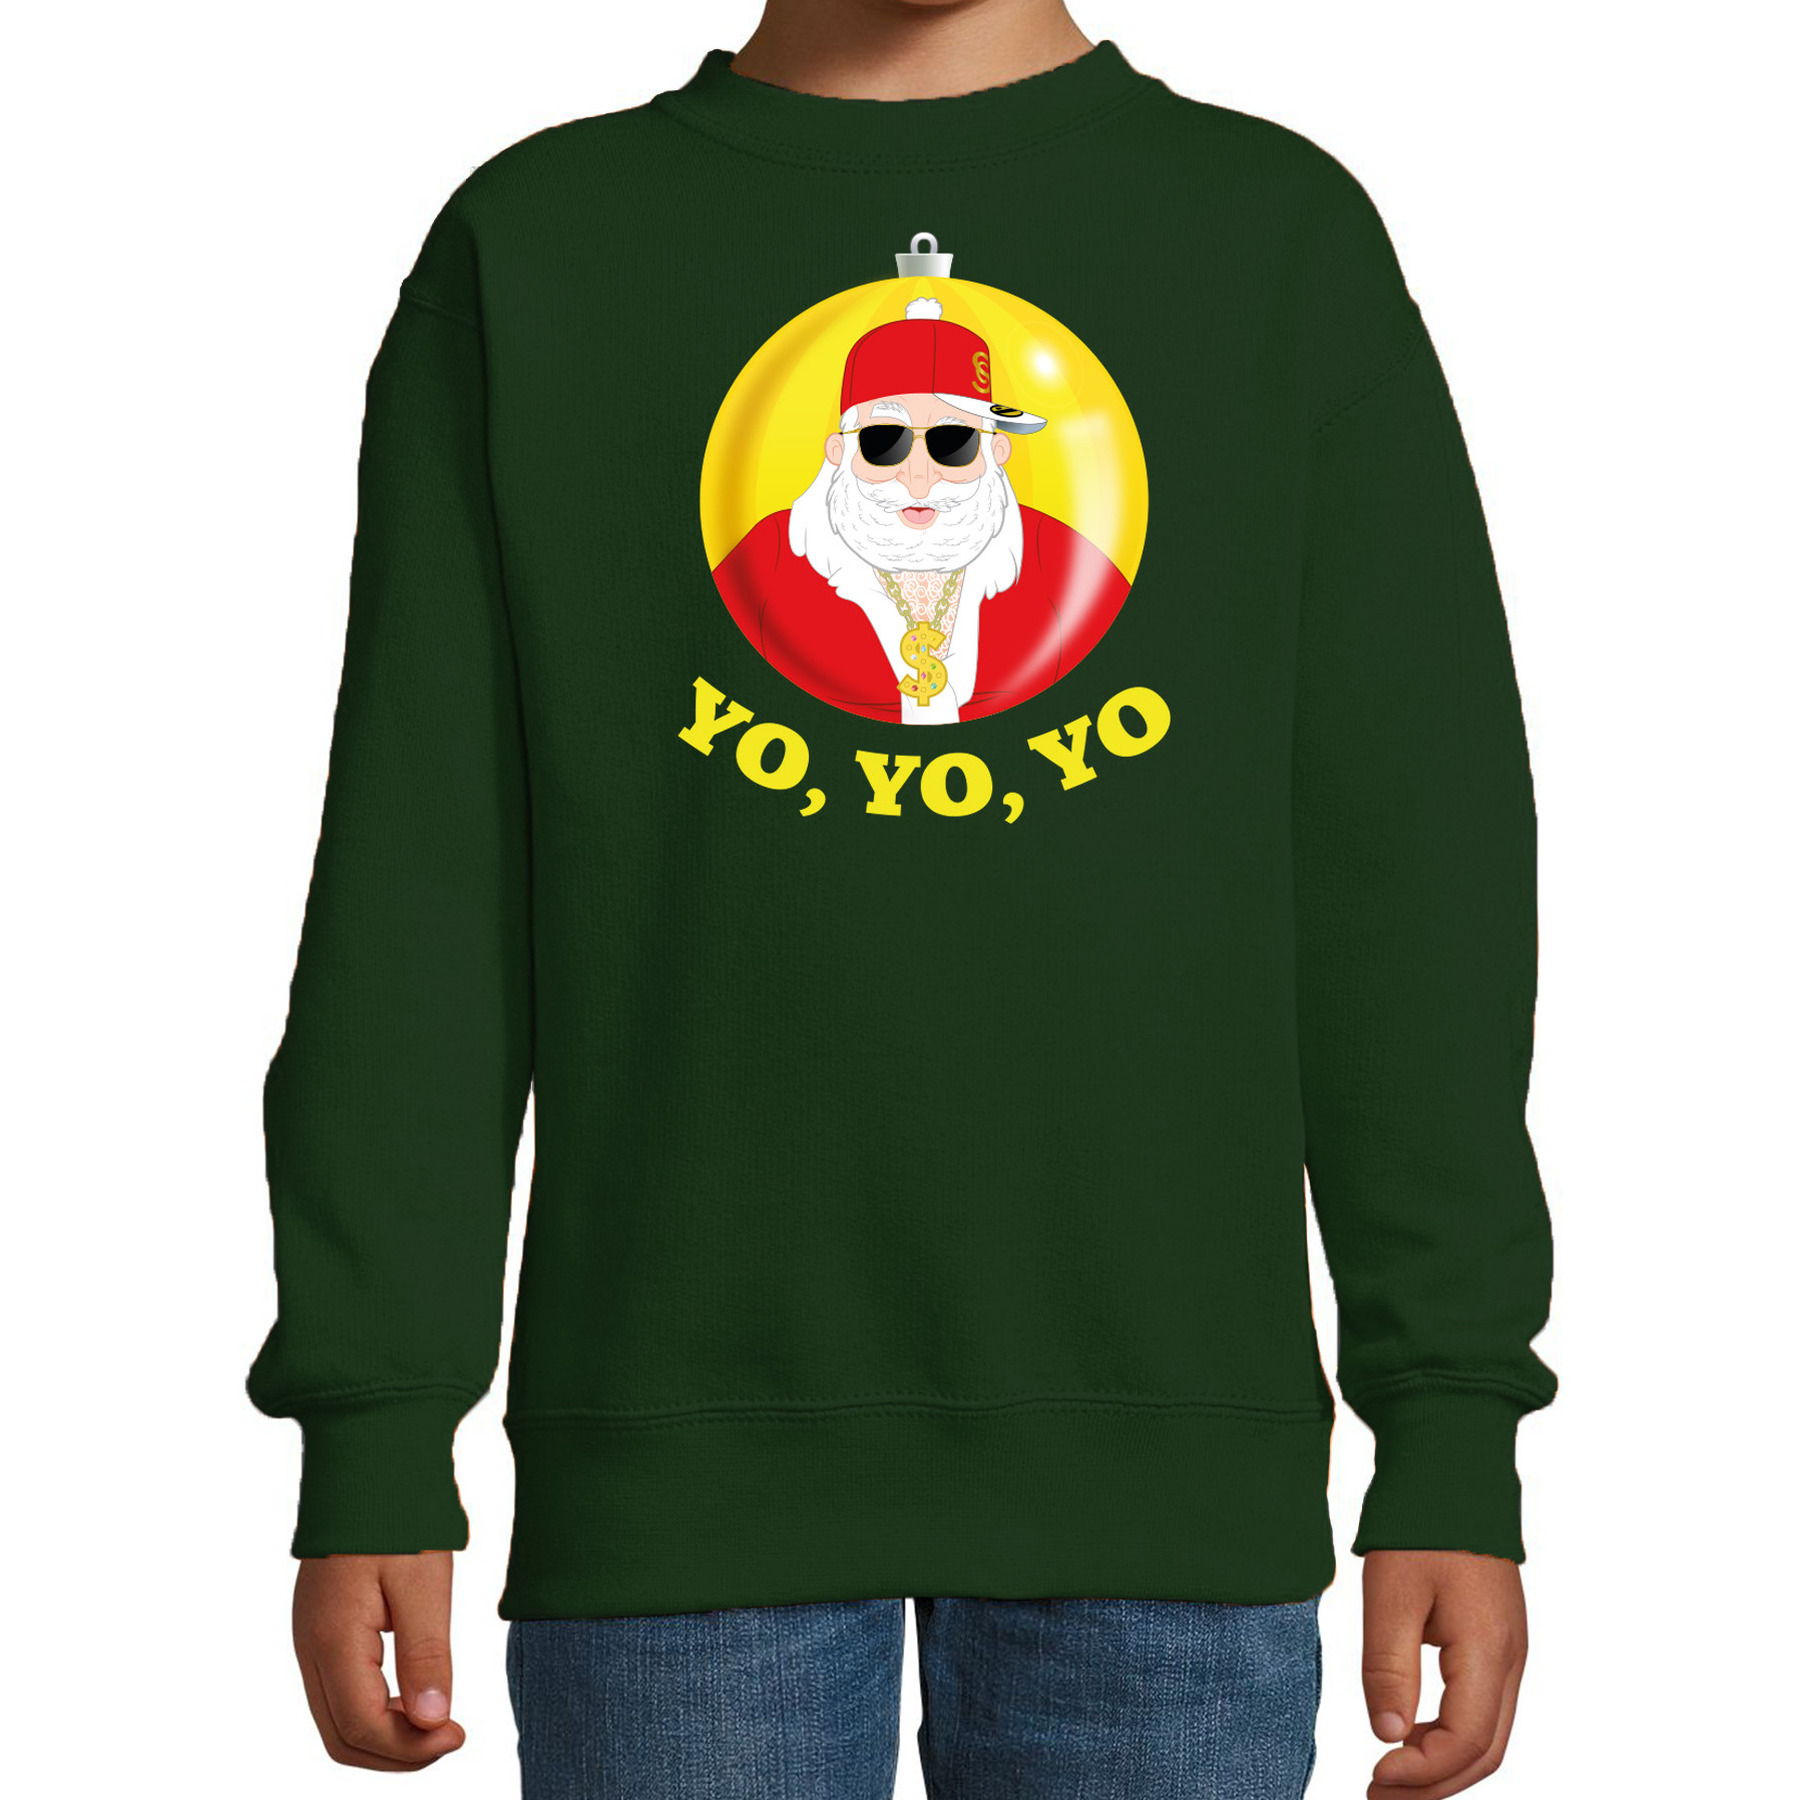 Kersttrui-sweater voor kinderen Kerstman groen Yo Yo Yo